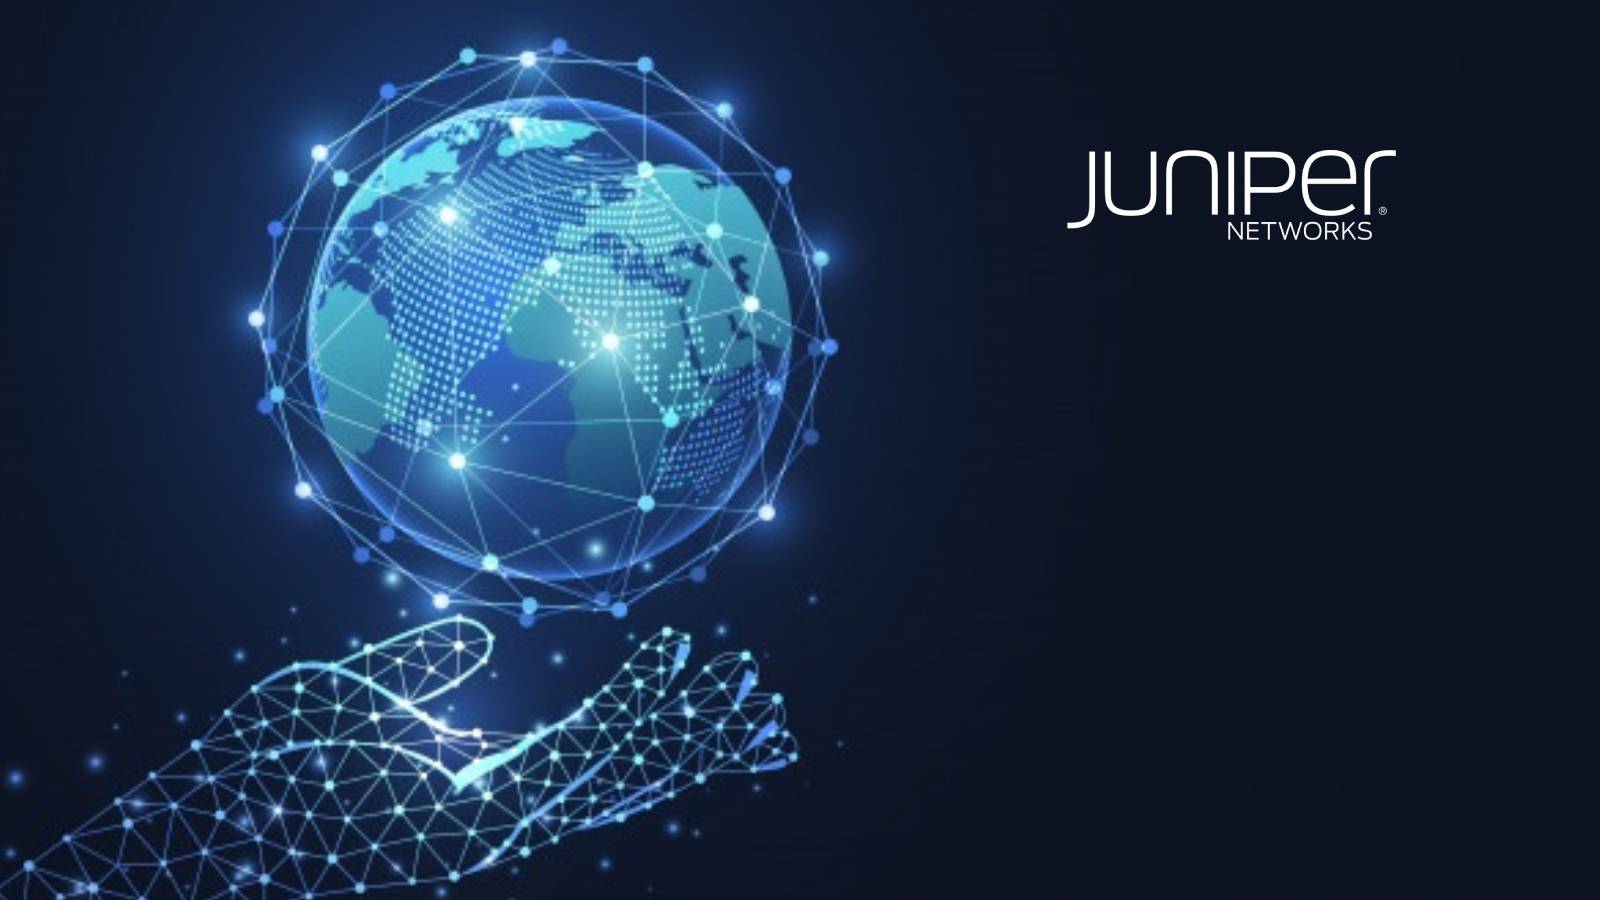 Juniper Works Updates Annual Meeting Of Stockholders